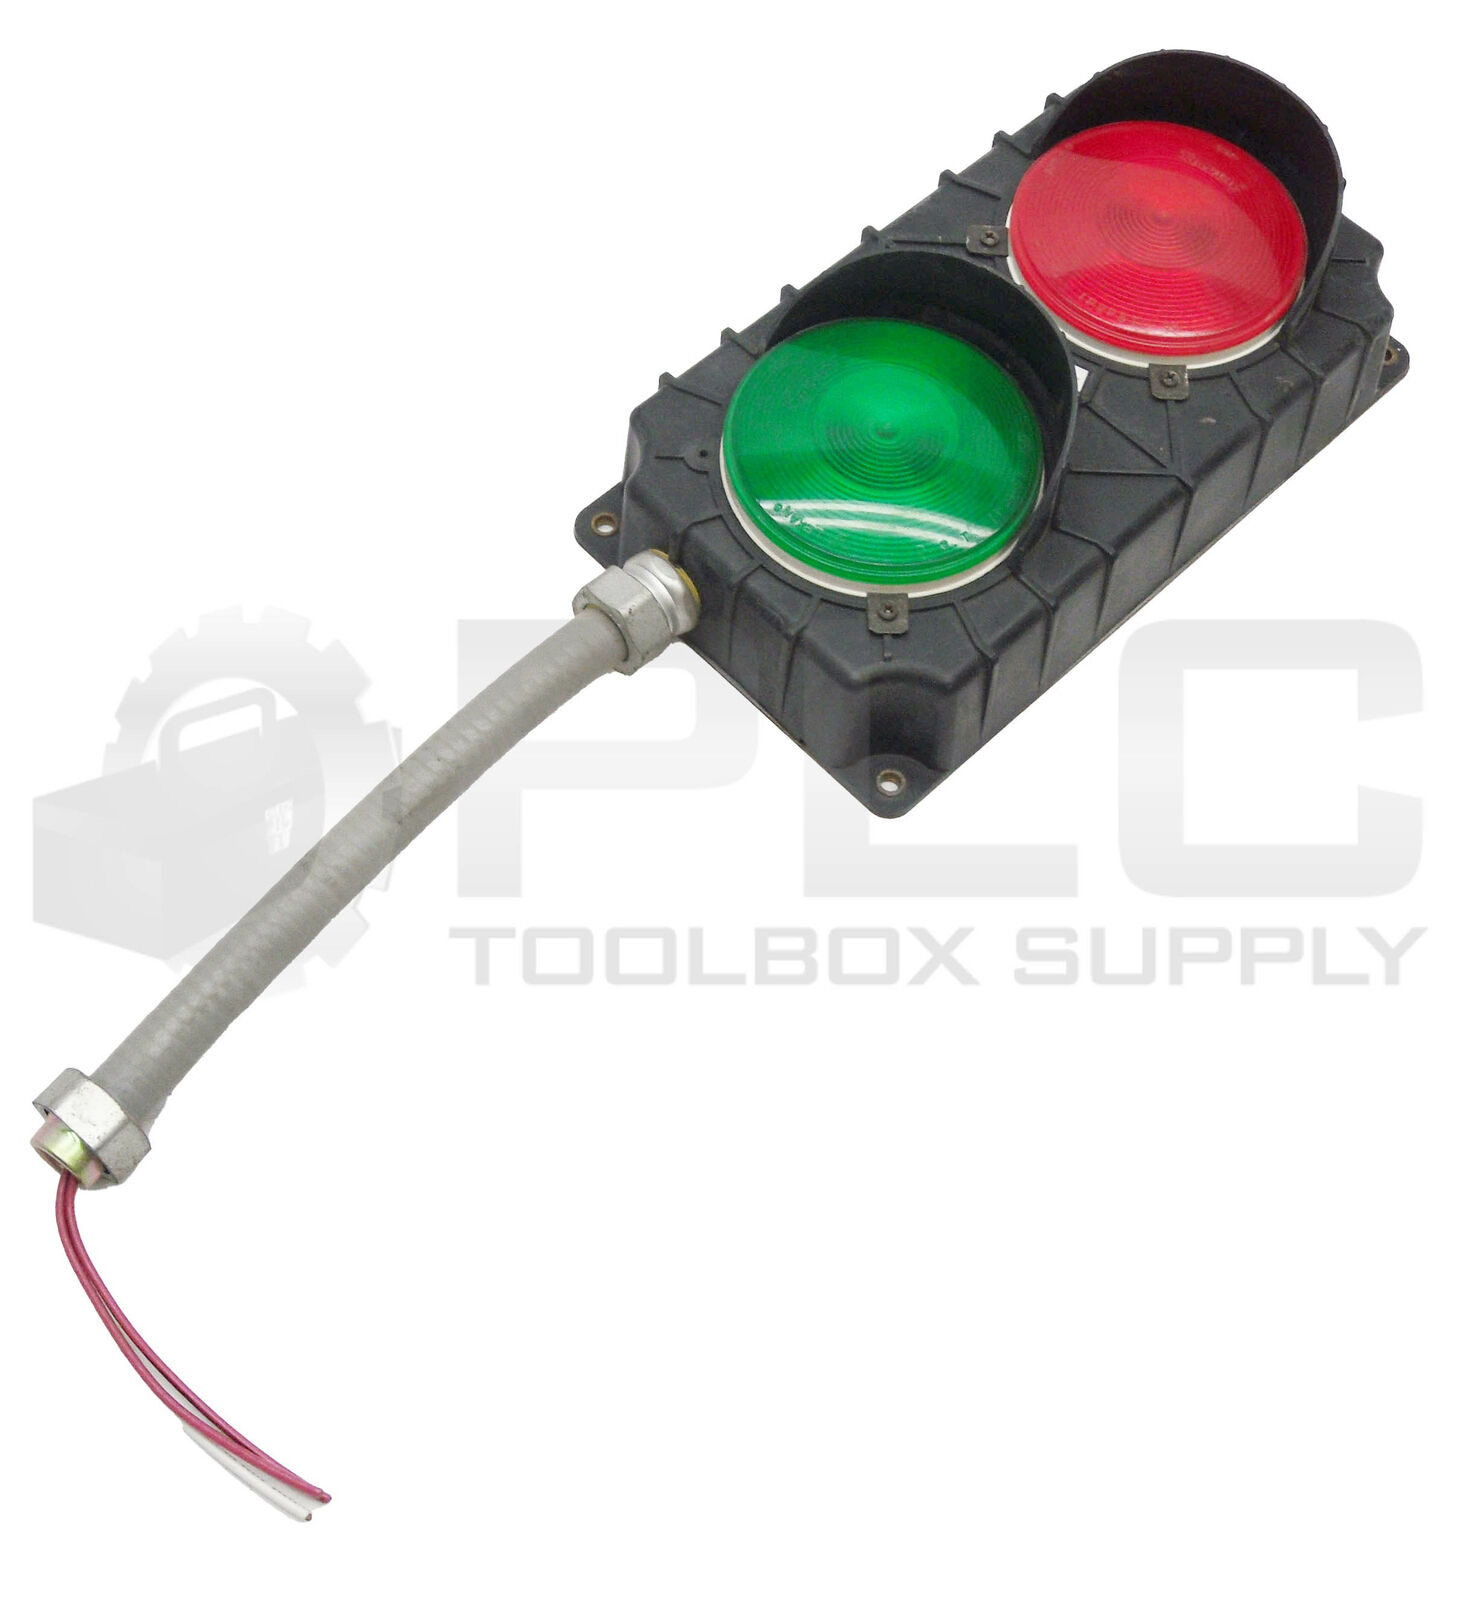 SERCO RED & GREEN TRAFFIC CONTROL LIGHT 24V